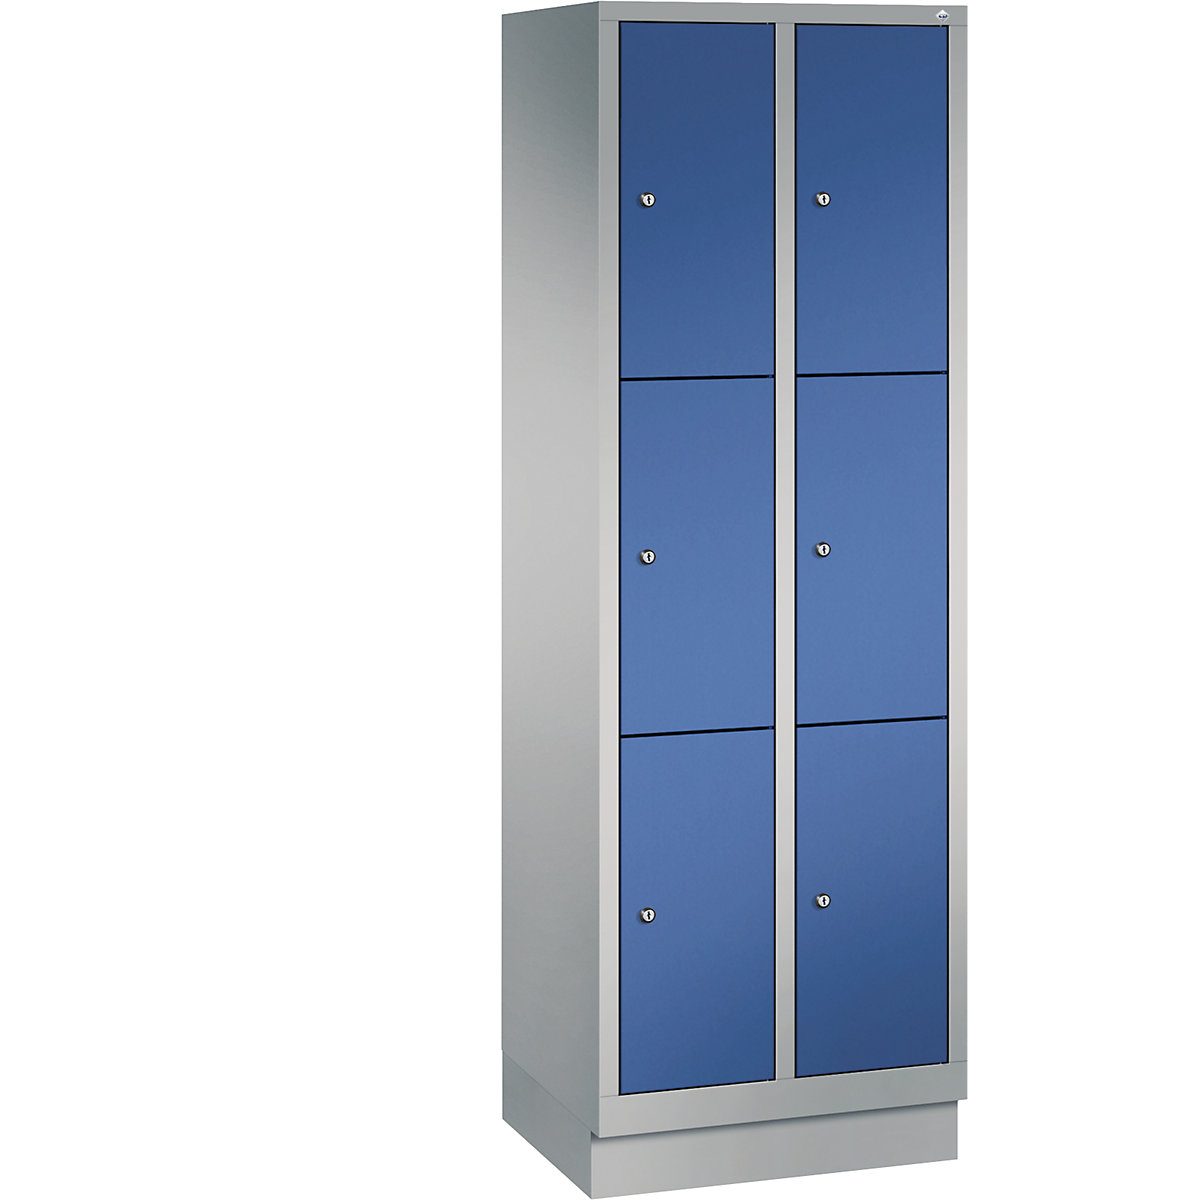 CLASSIC locker unit with plinth – C+P, 2 compartments, 3 shelf compartments each, compartment width 300 mm, white aluminium / gentian blue-8